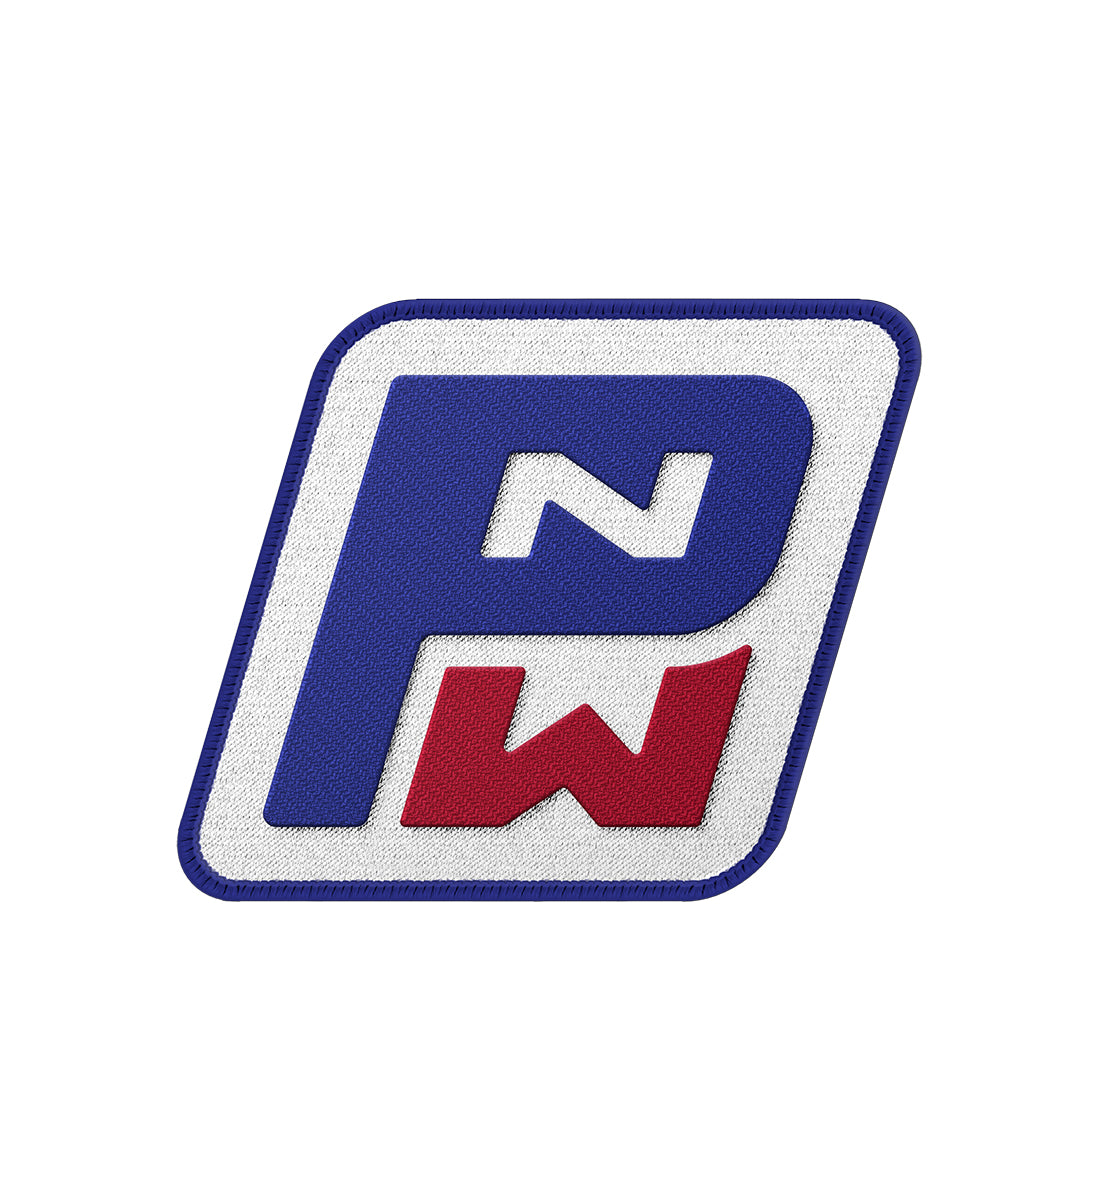 Nitro Patch - The Great PNW